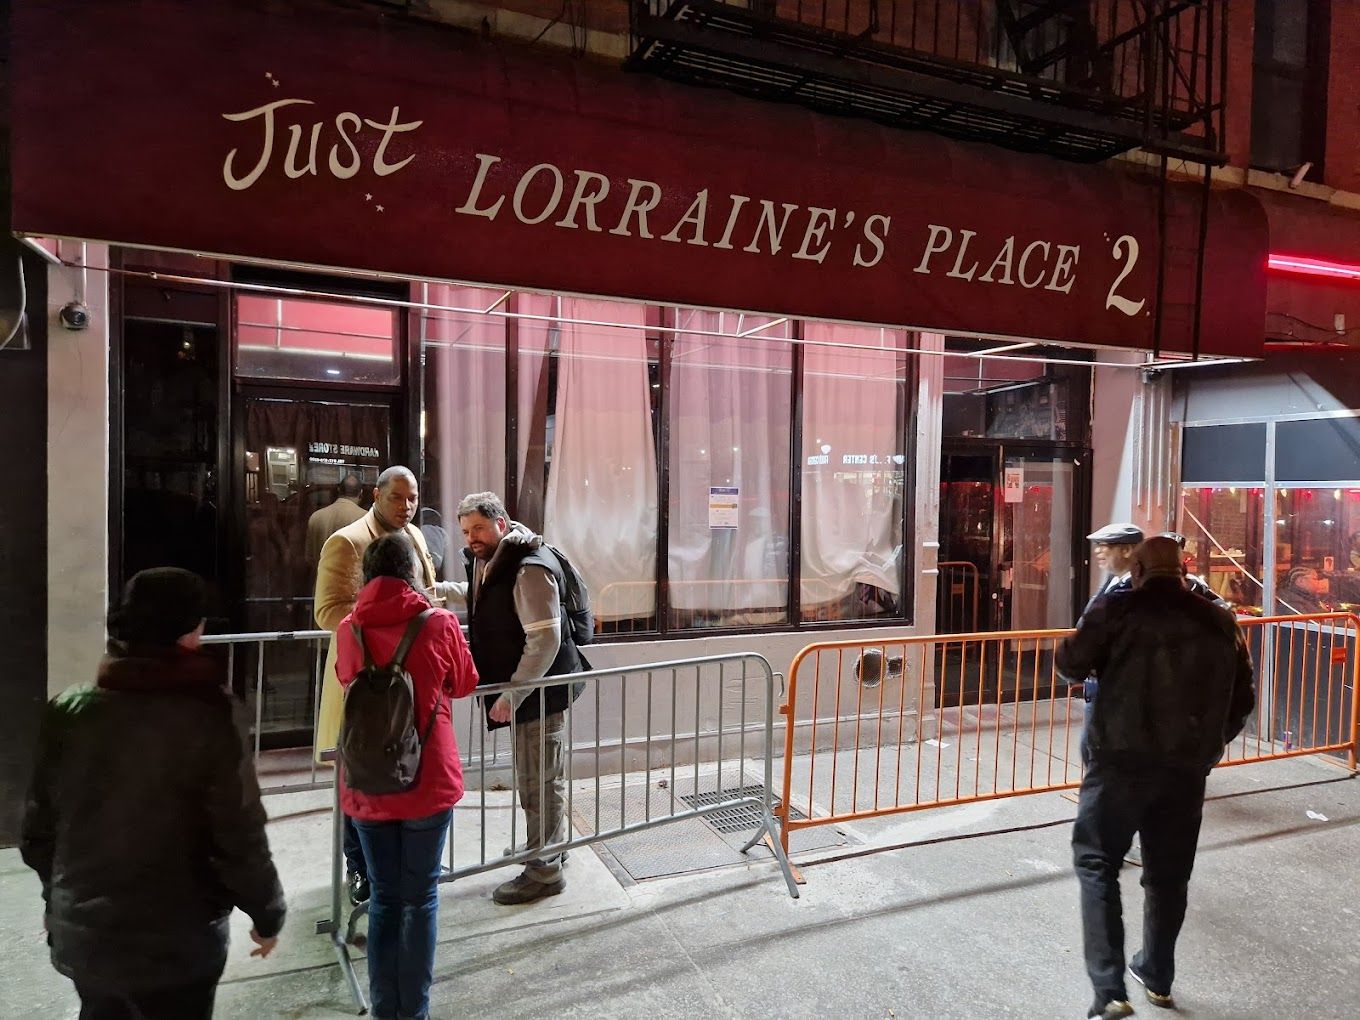 Just Lorraine's Place 2